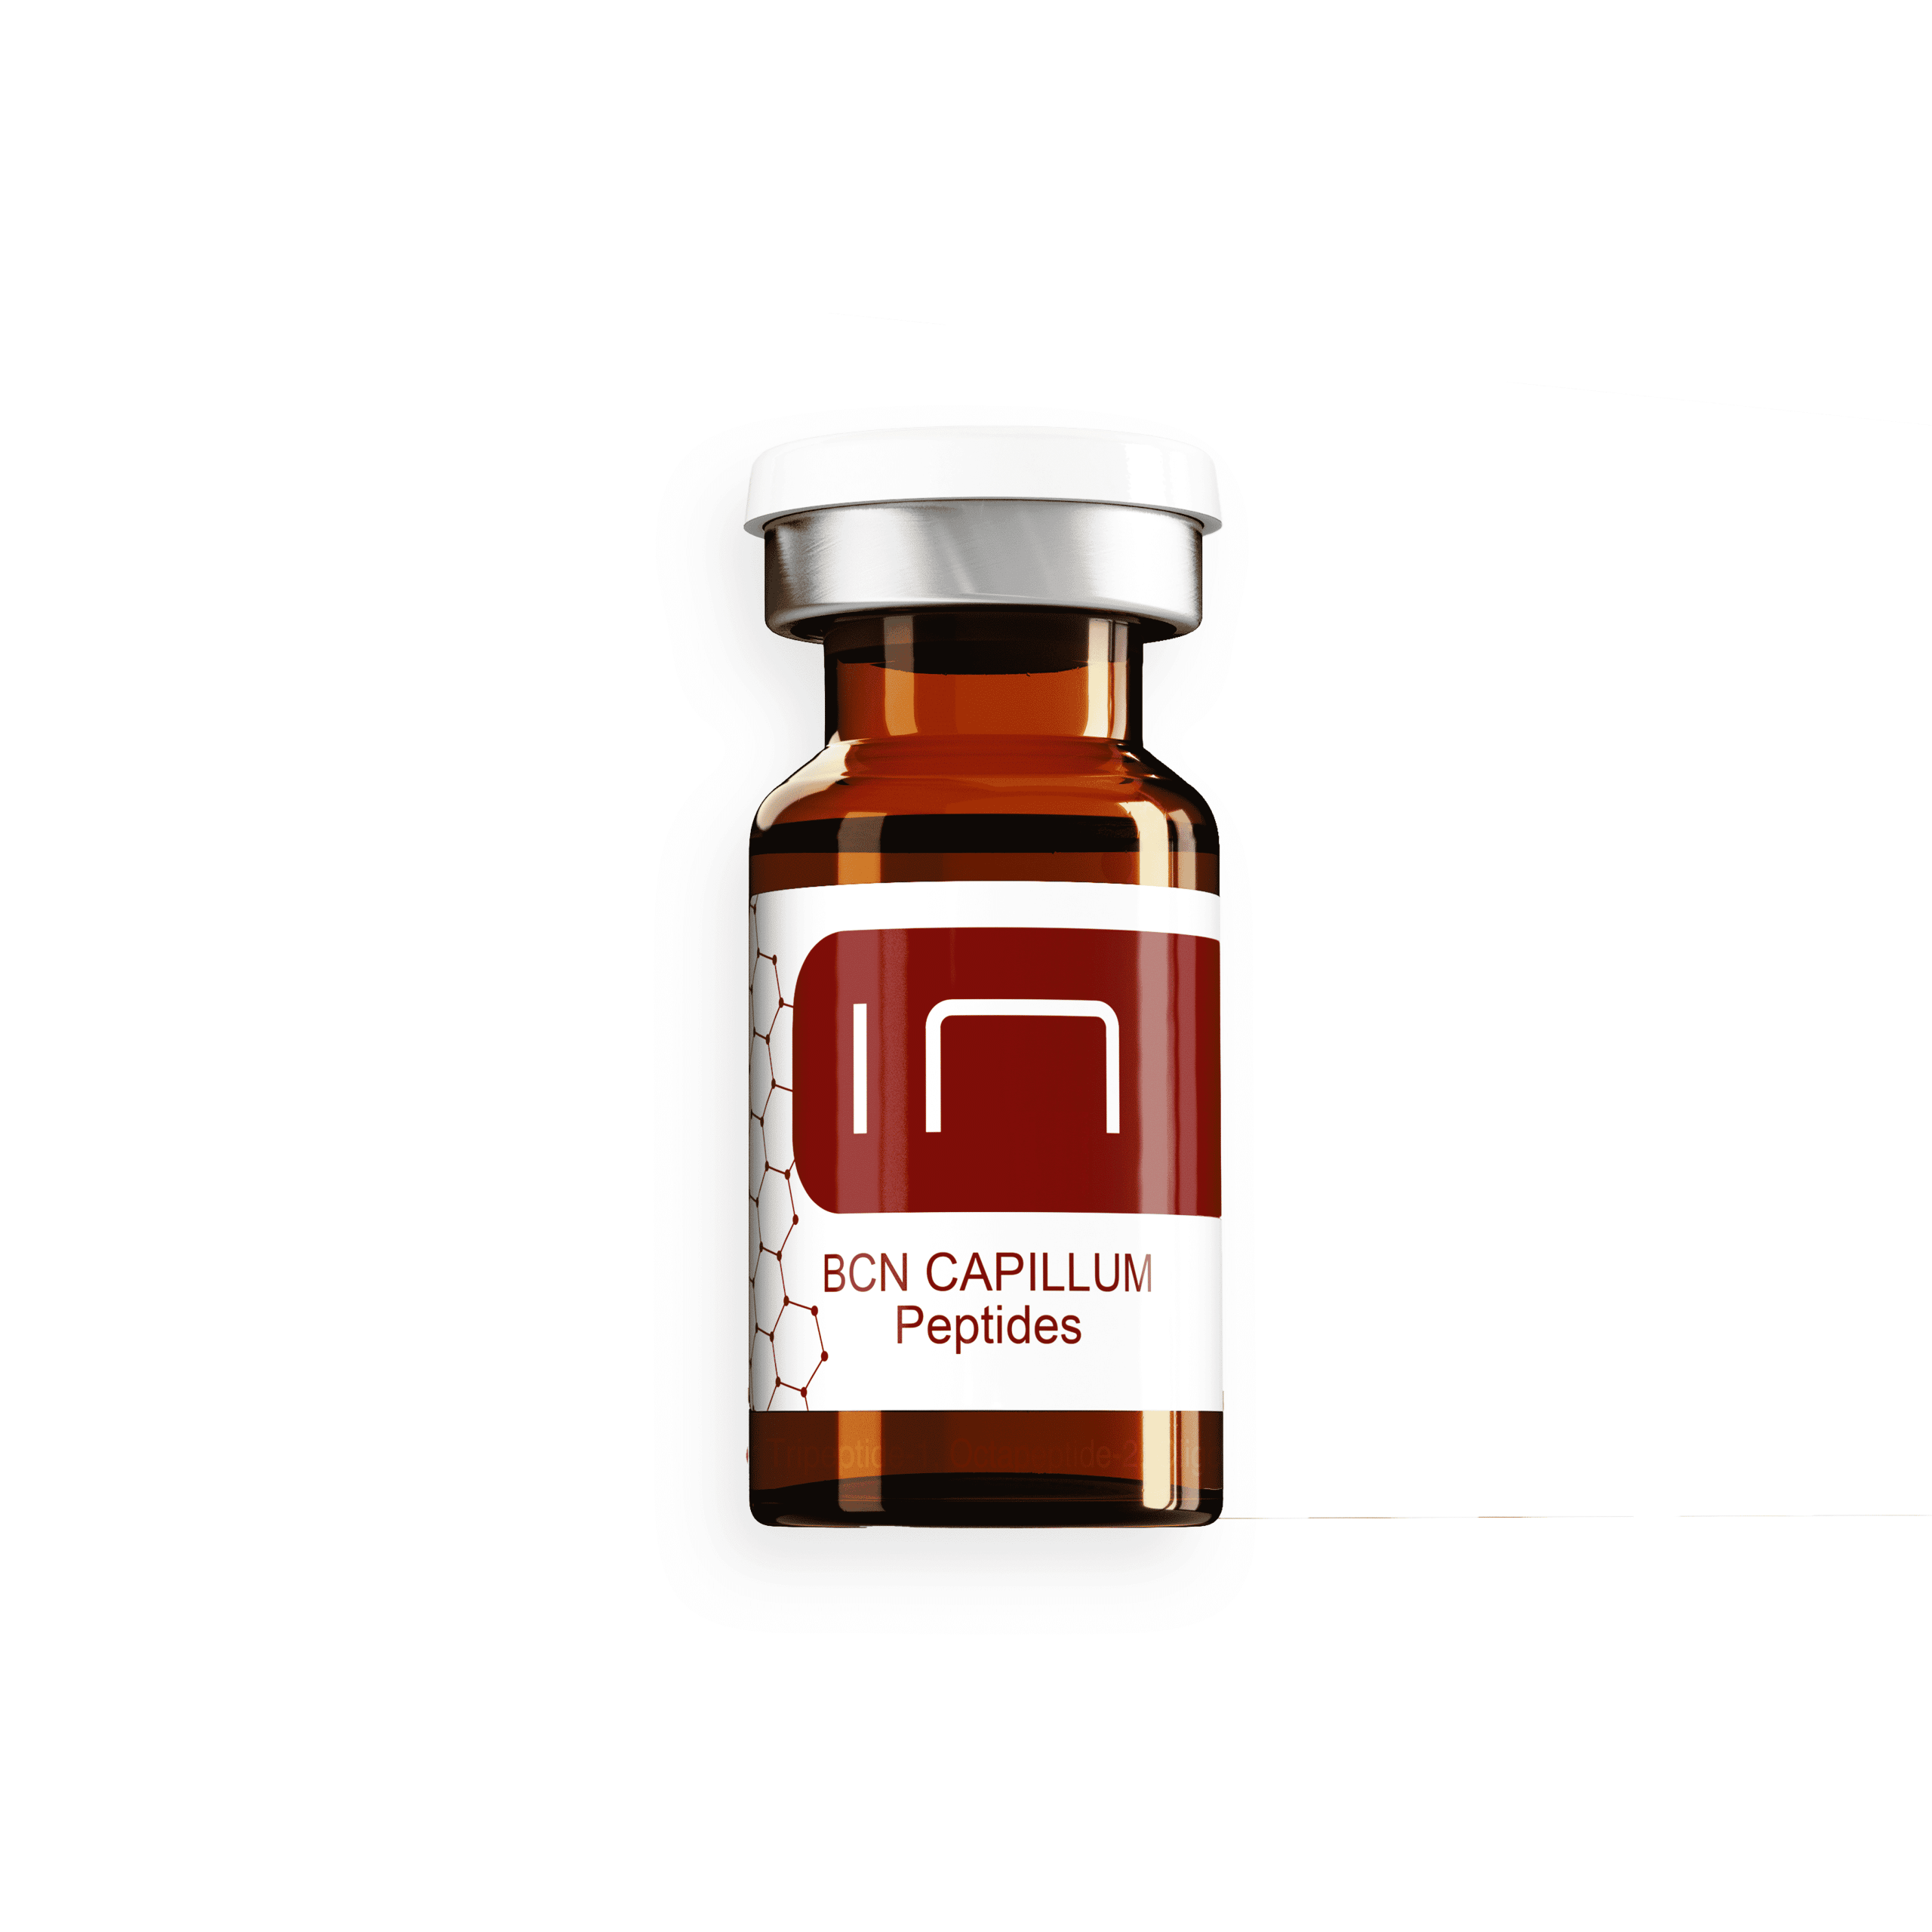 BCN Capillum - Peptides/Box of 5 vials of 5 ml